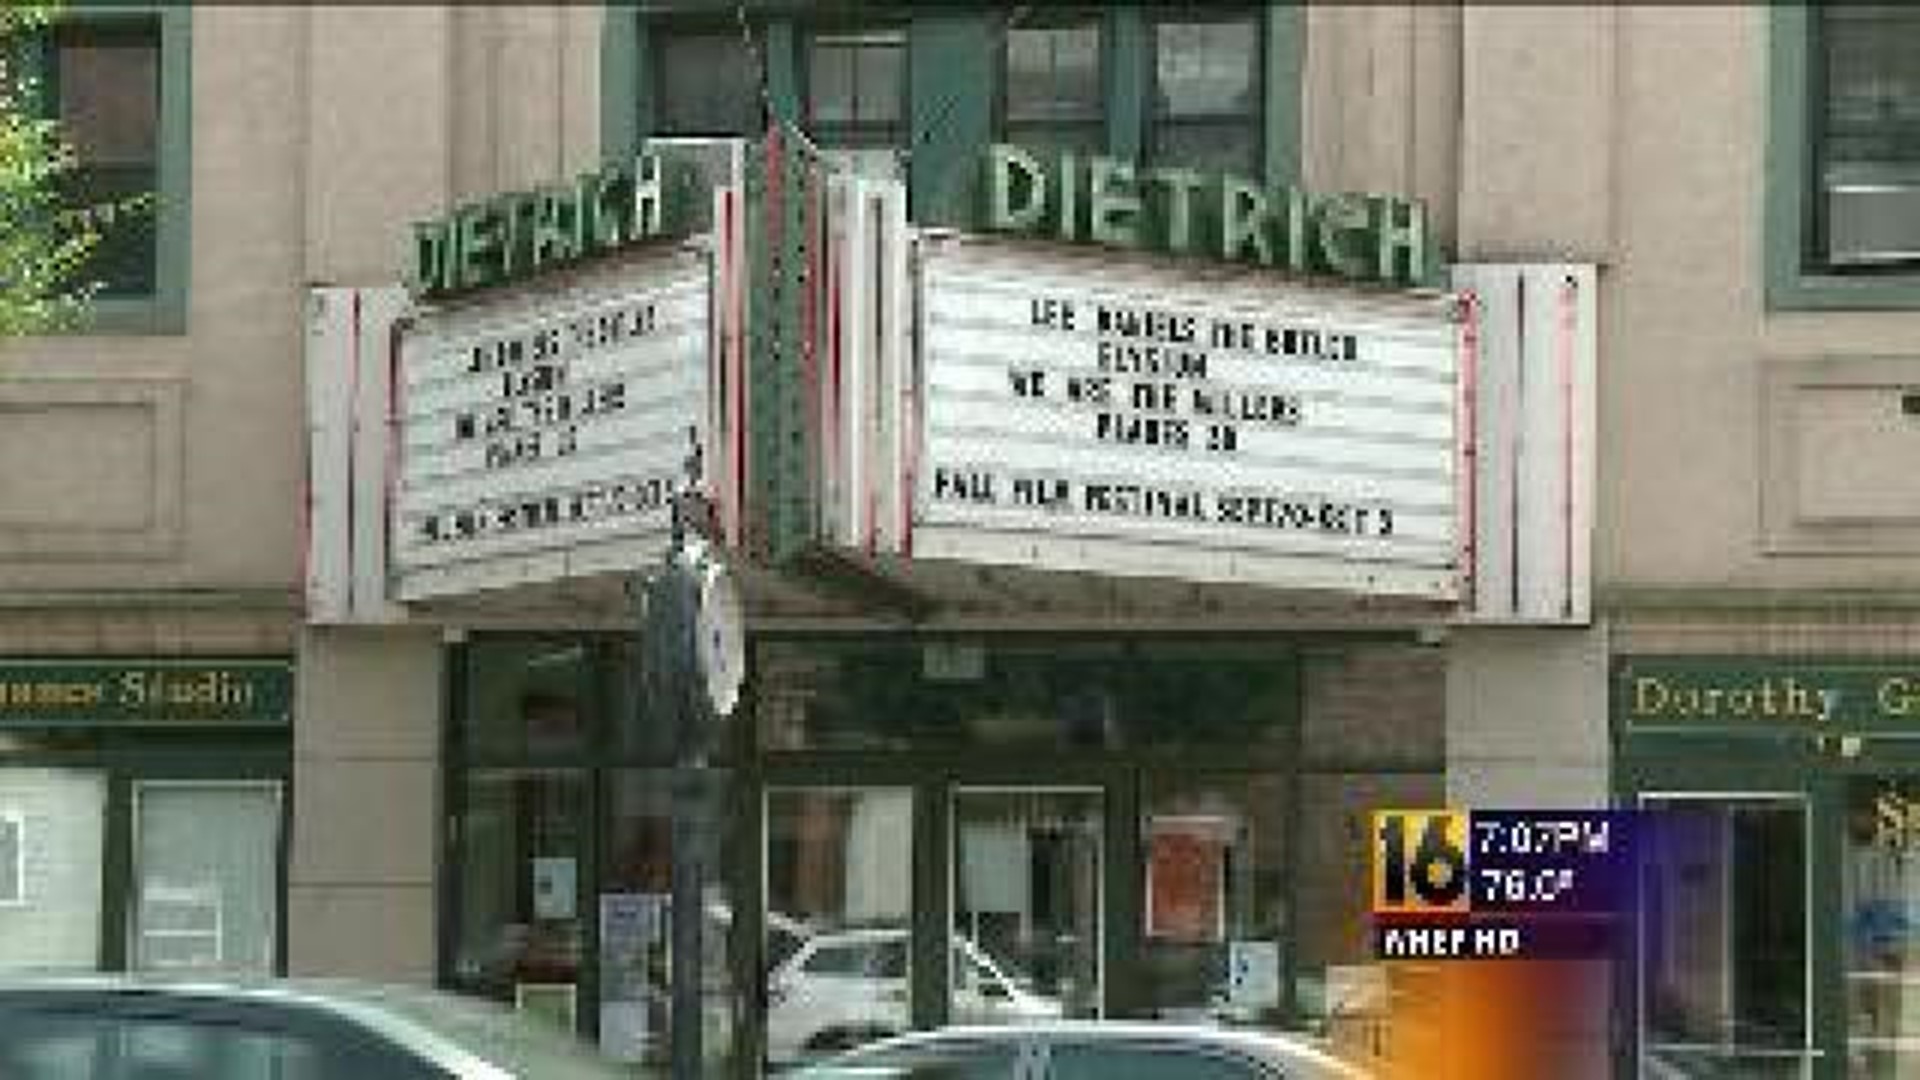 Digital Upgrade to Dietrich Theater